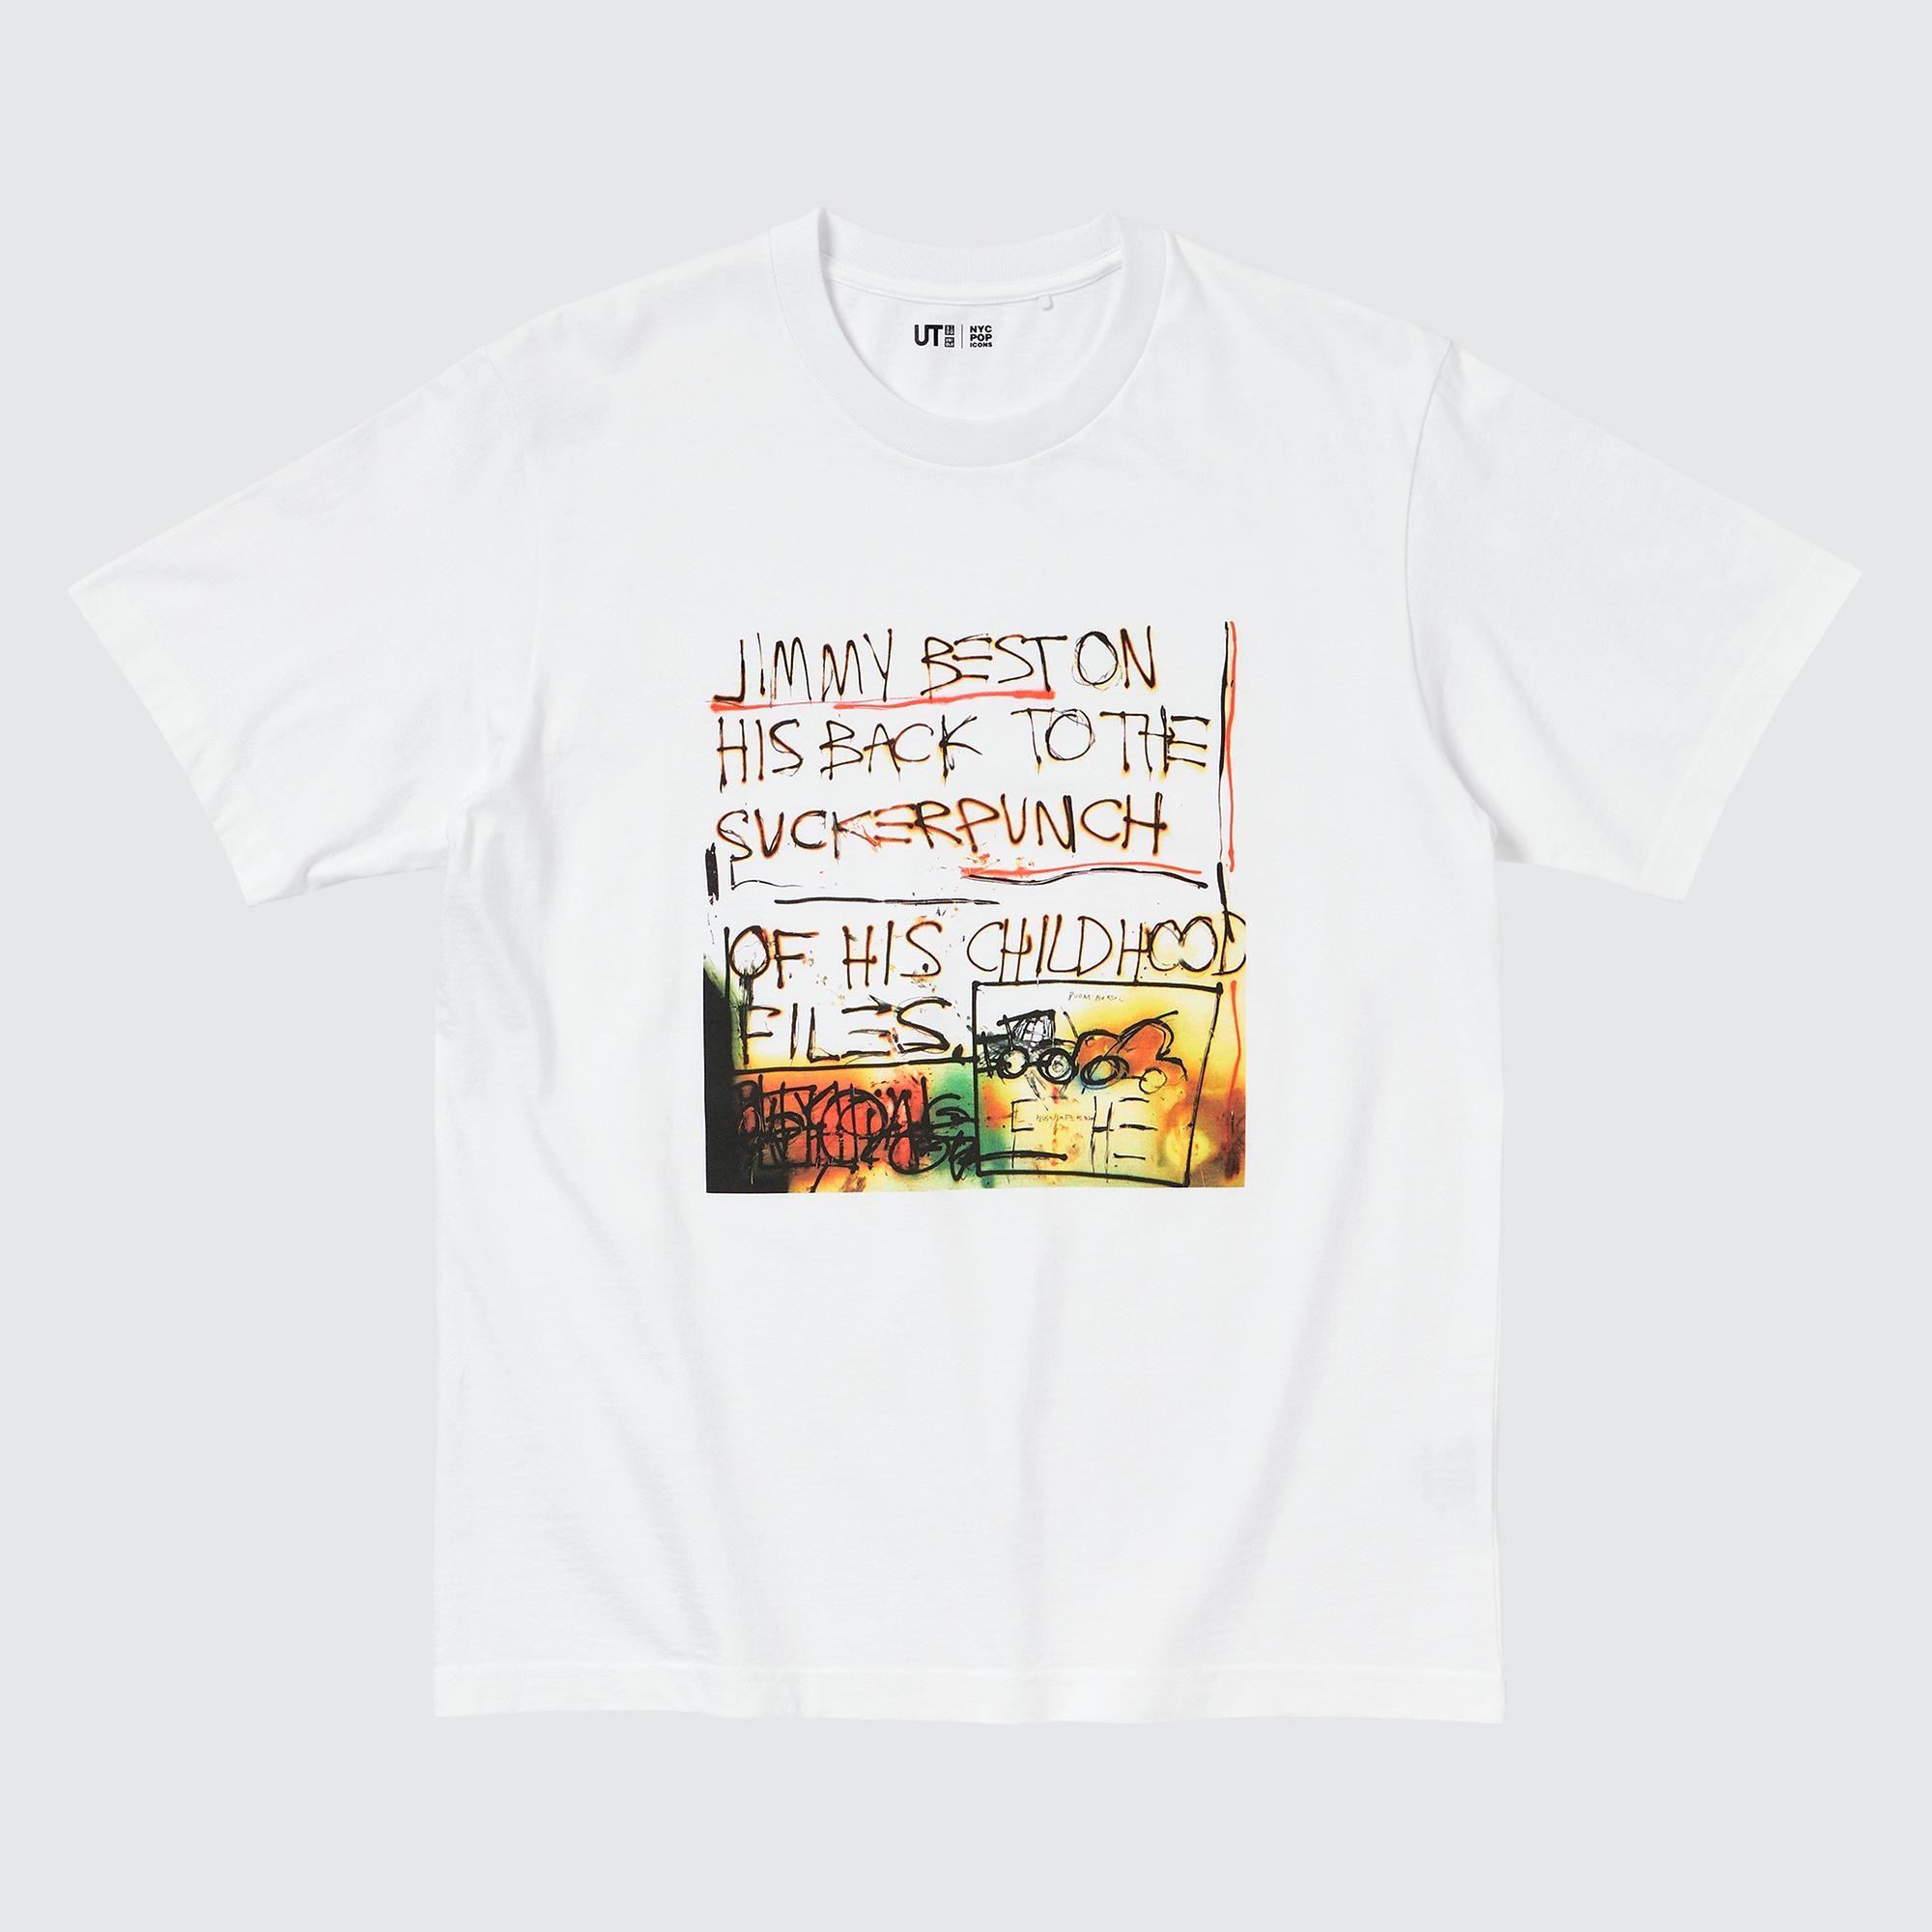 Retro New York City Pop Art Style Tee shirts, New York City T-Shirt